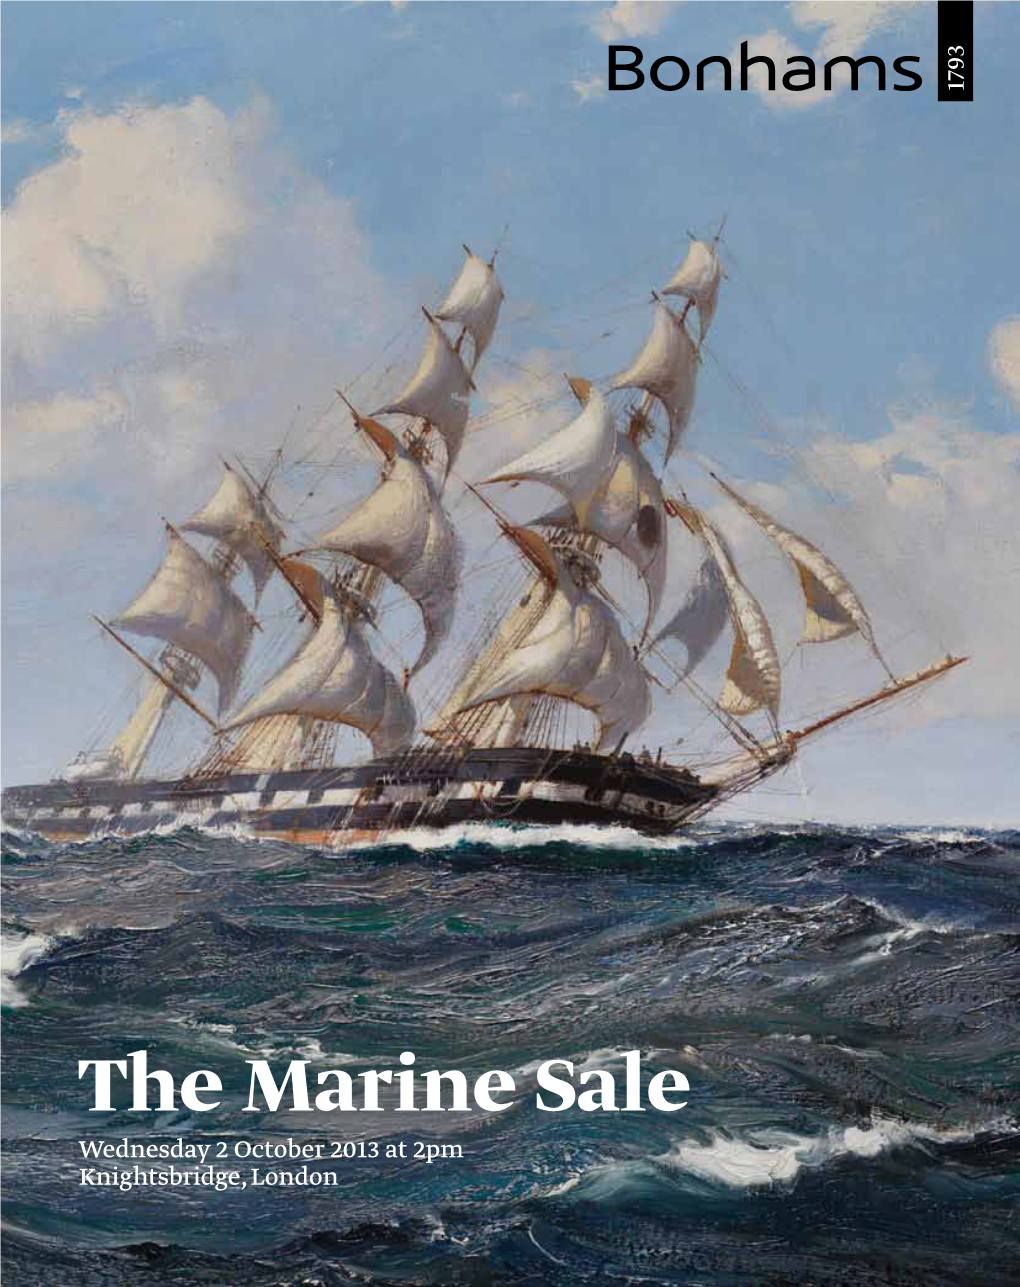 The Marine Sale